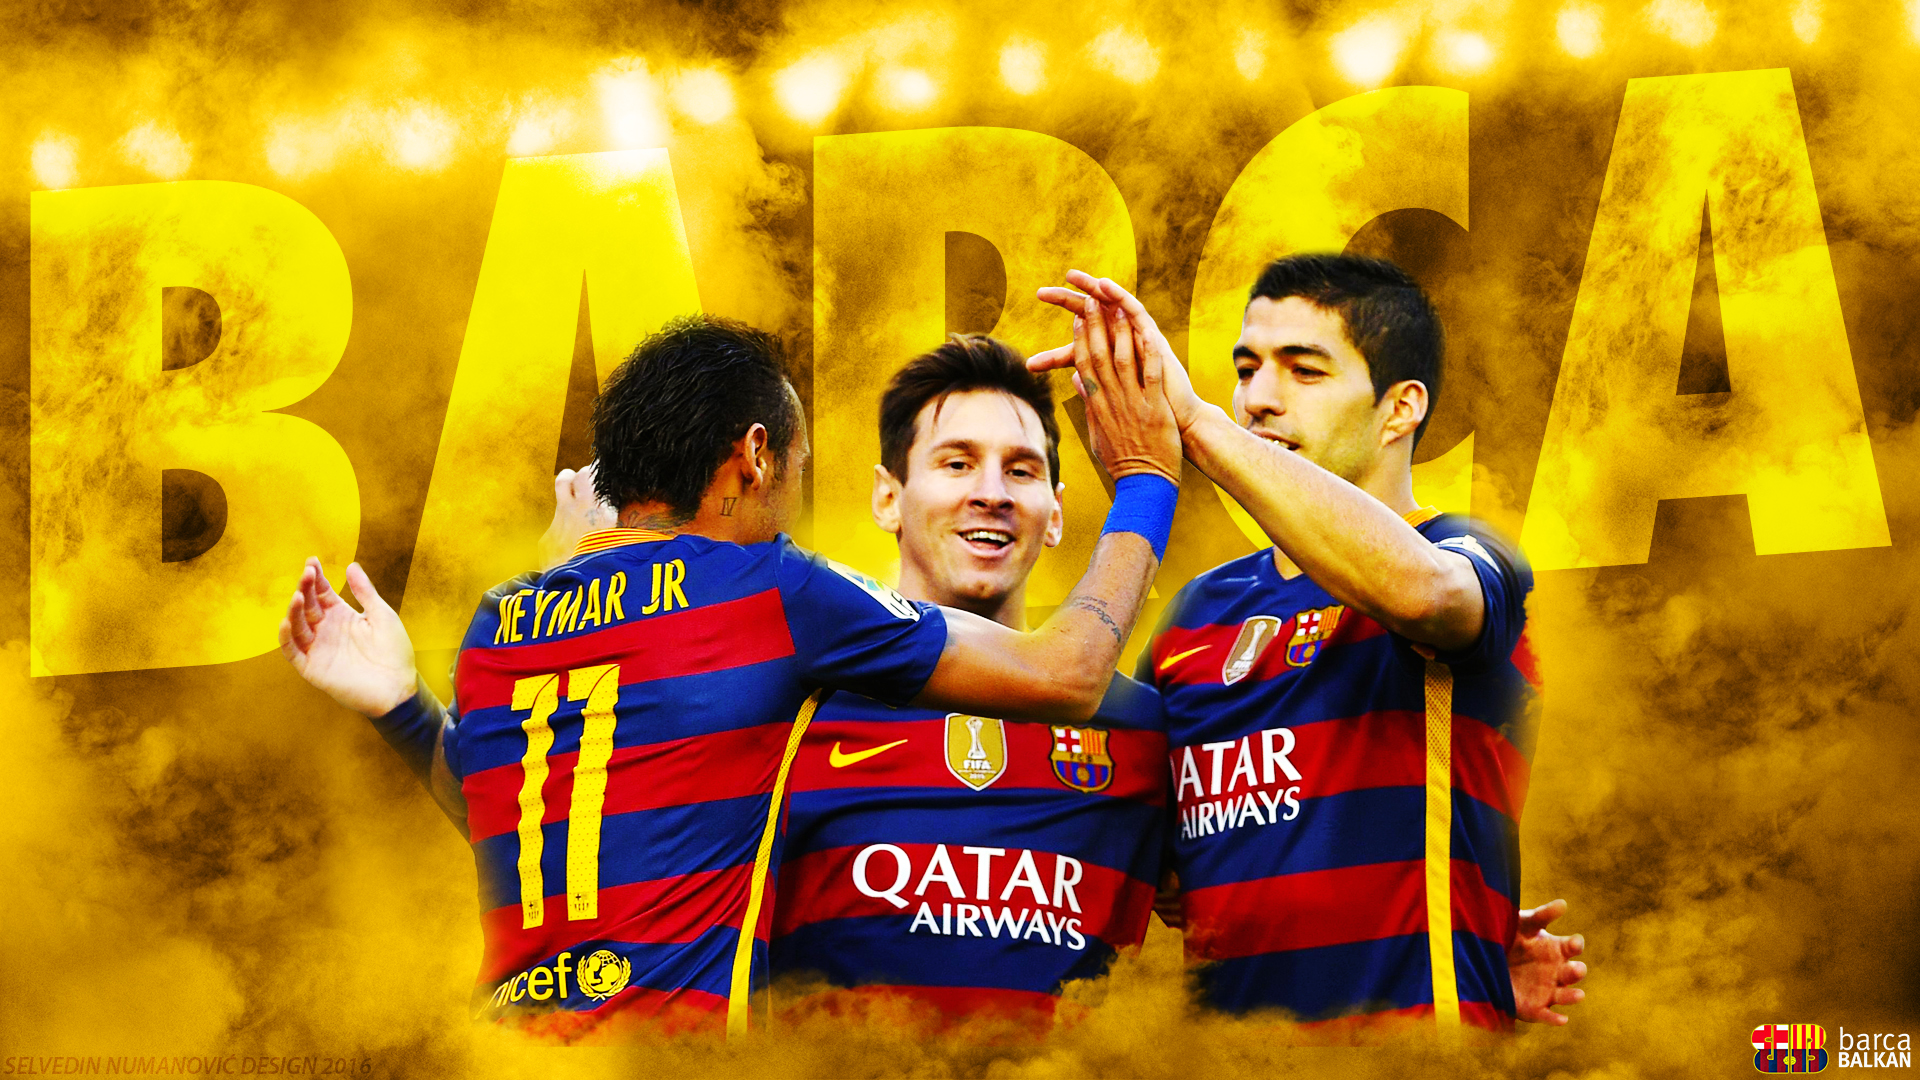 Messi Suarez Neymar HD Wallpaper By Selvedinfcb On